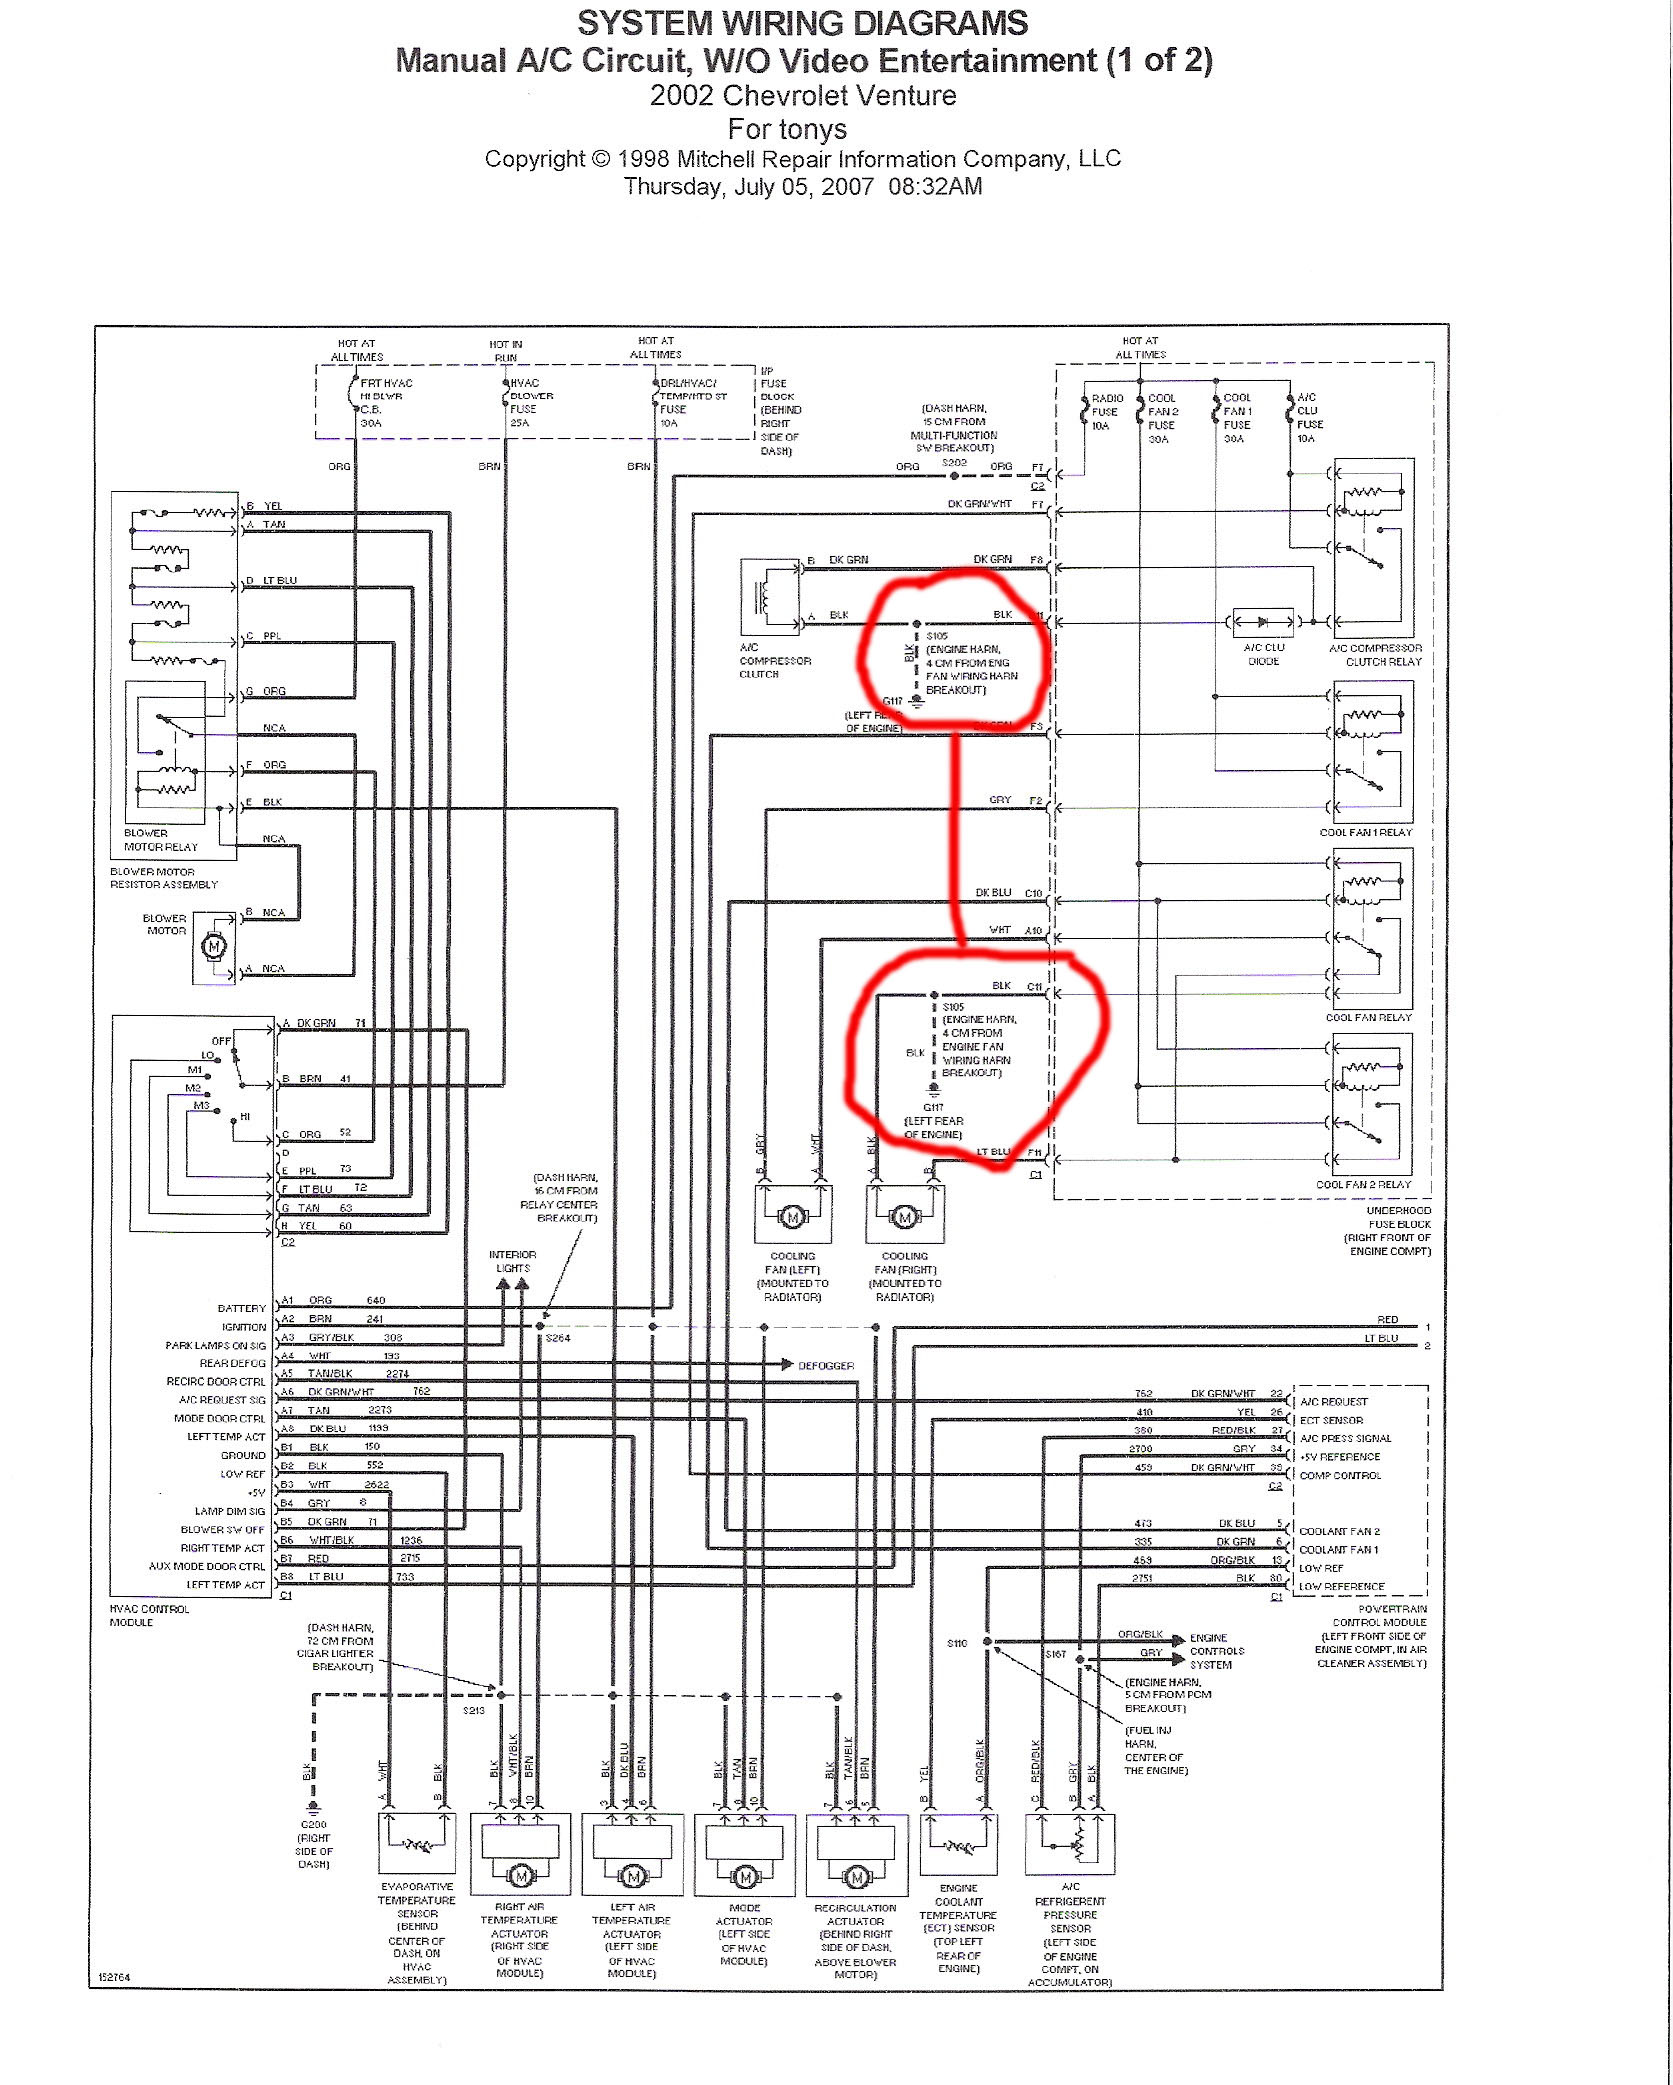 2003 Dodge Durango Blower Motor Resistor Wiring Diagram from chevroletforum.com